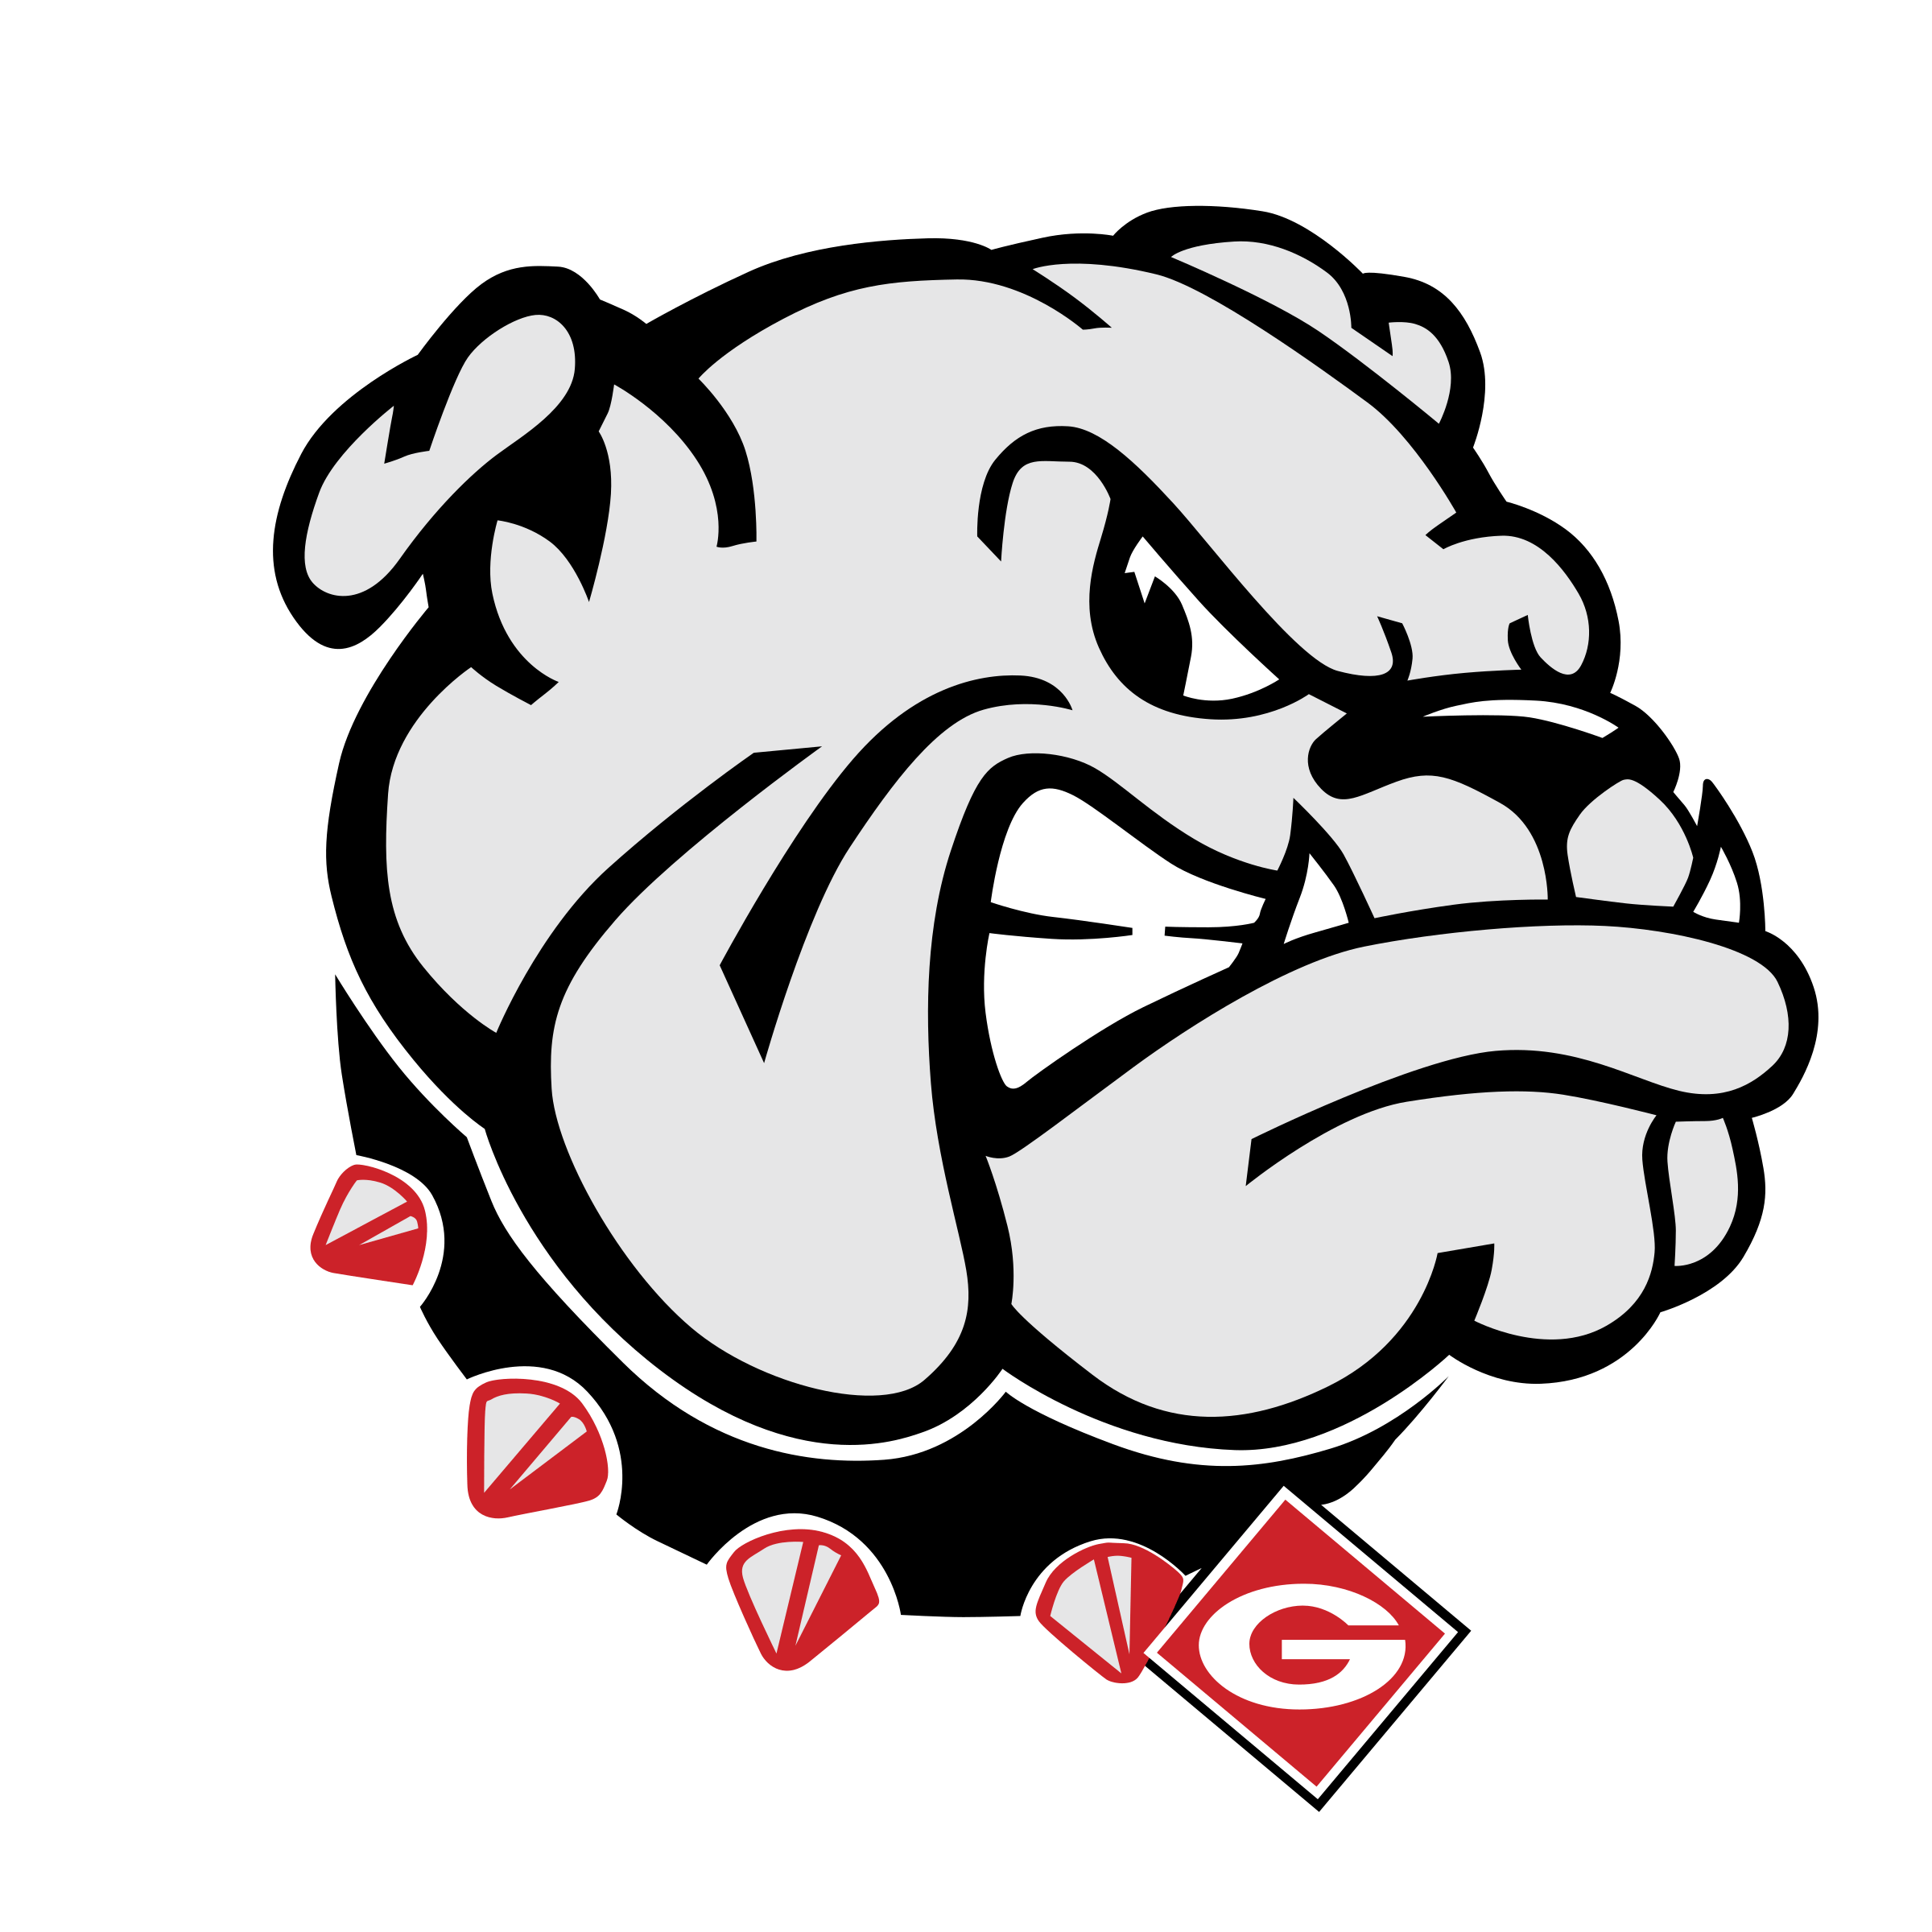 Georgia Bulldogs Logo - Georgia Bulldogs Logo PNG Transparent & SVG Vector